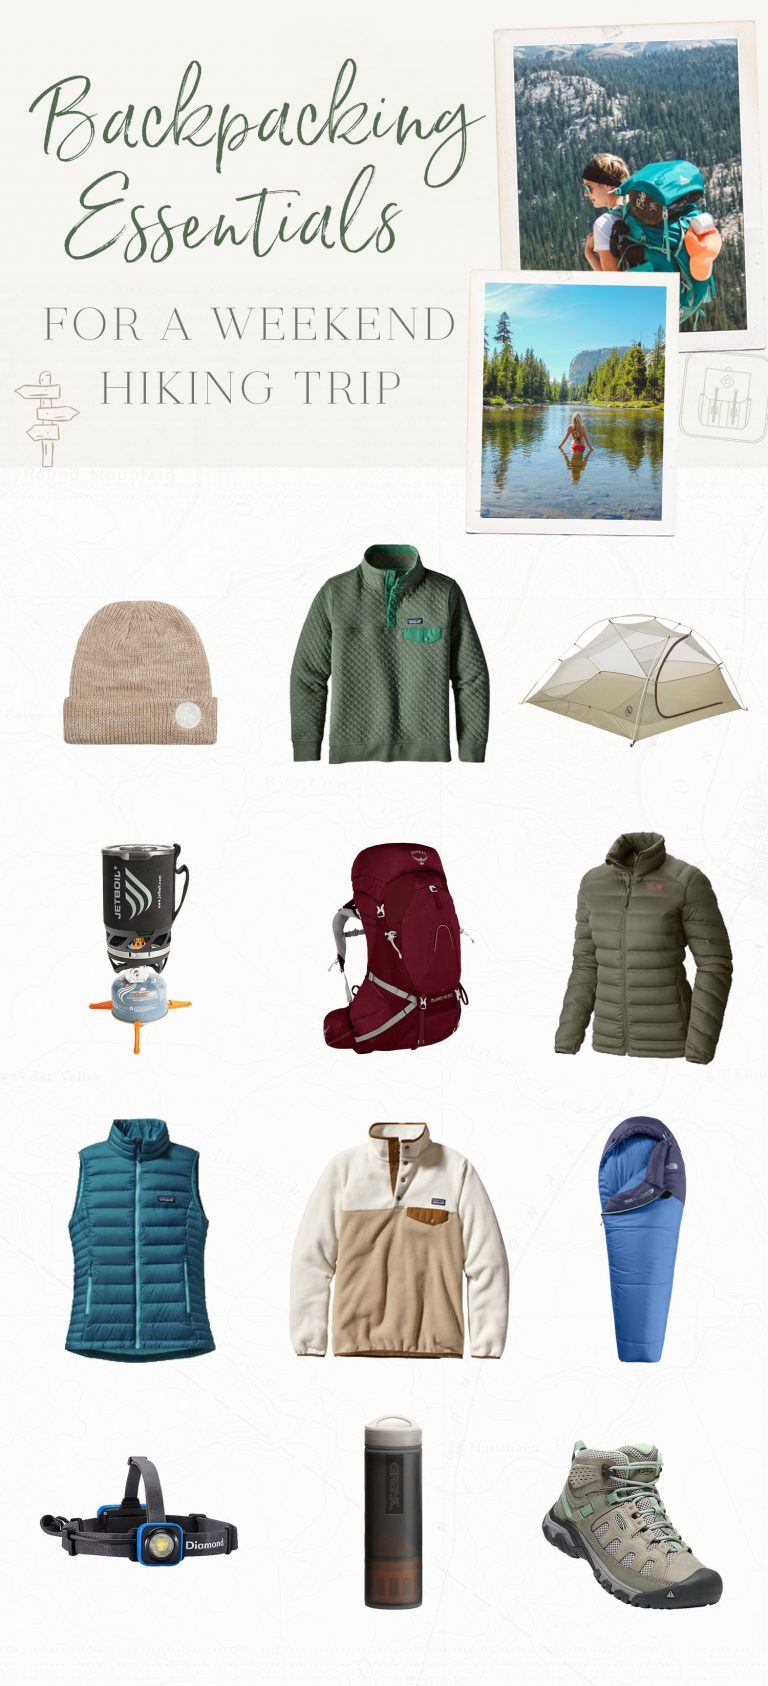 Backpacking-essentials-pin-768x1686.jpg